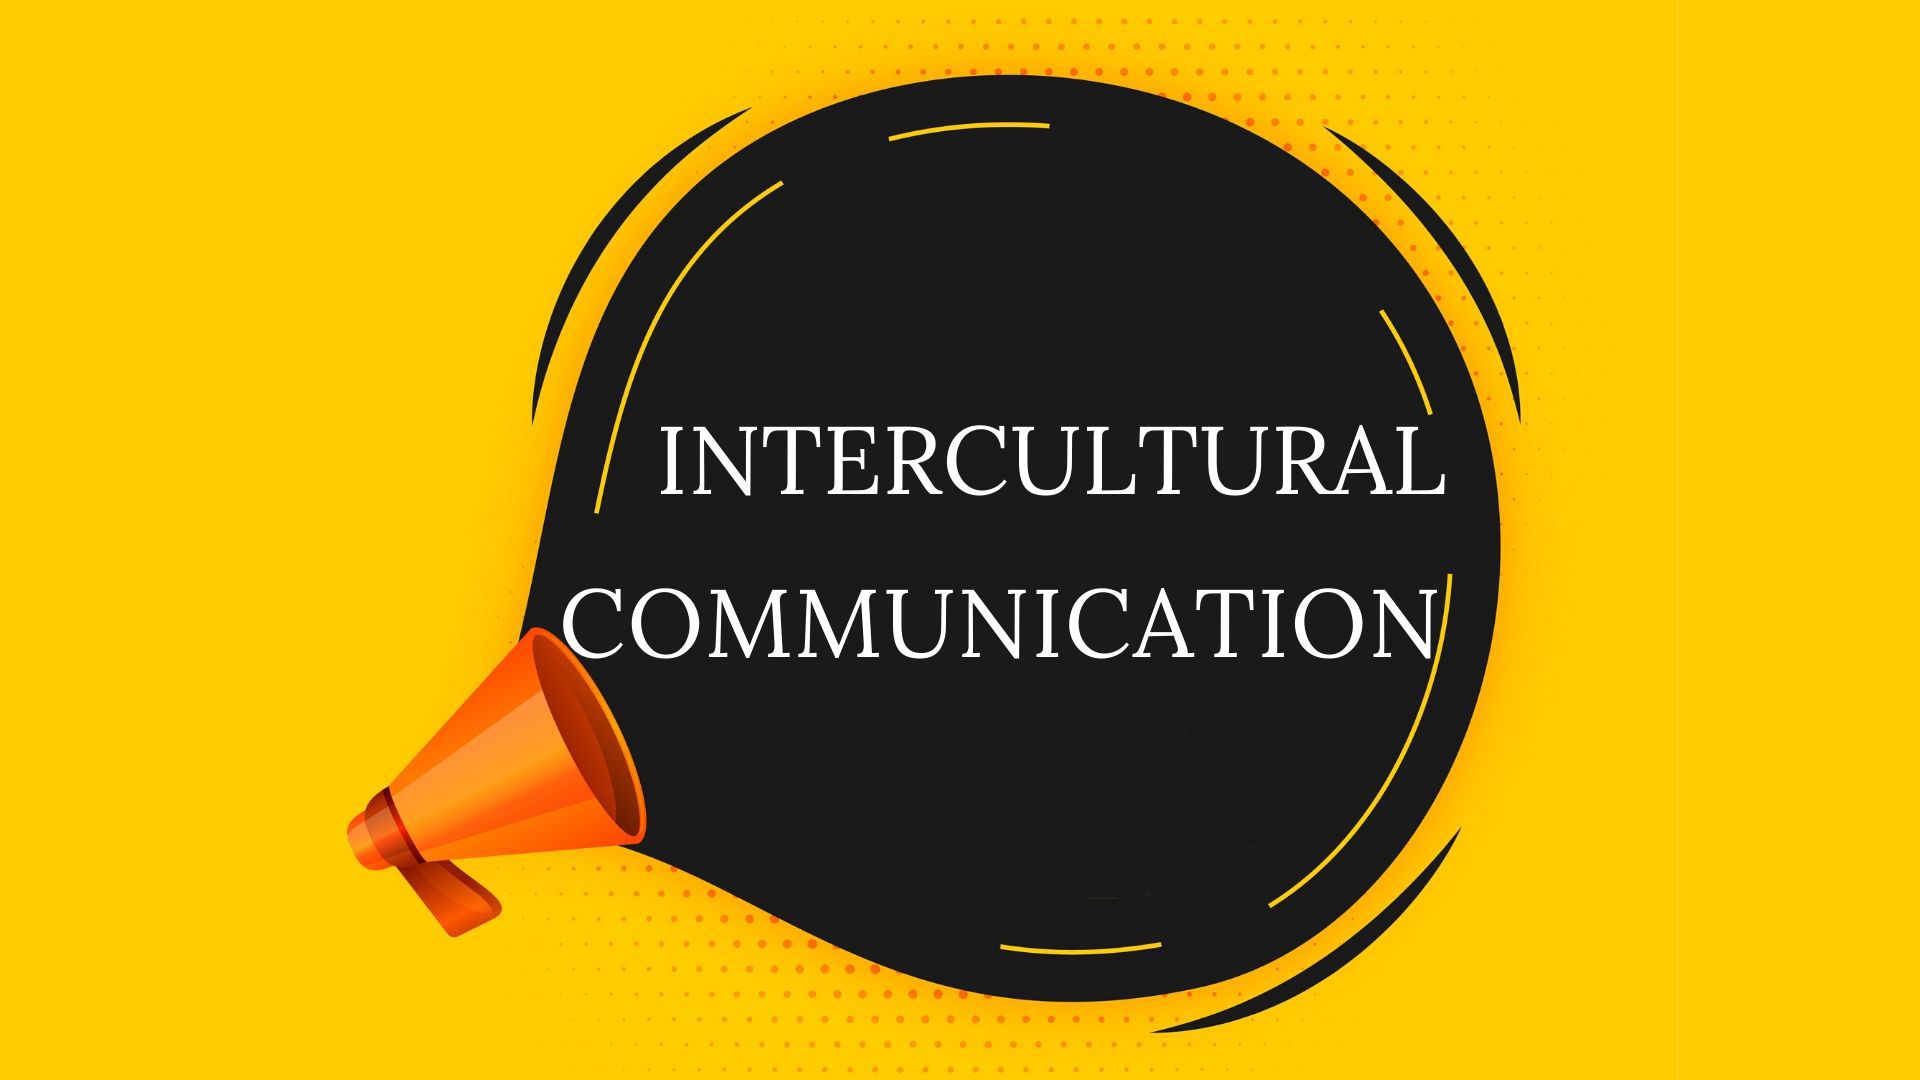 Digital Media and Intercultural Communication